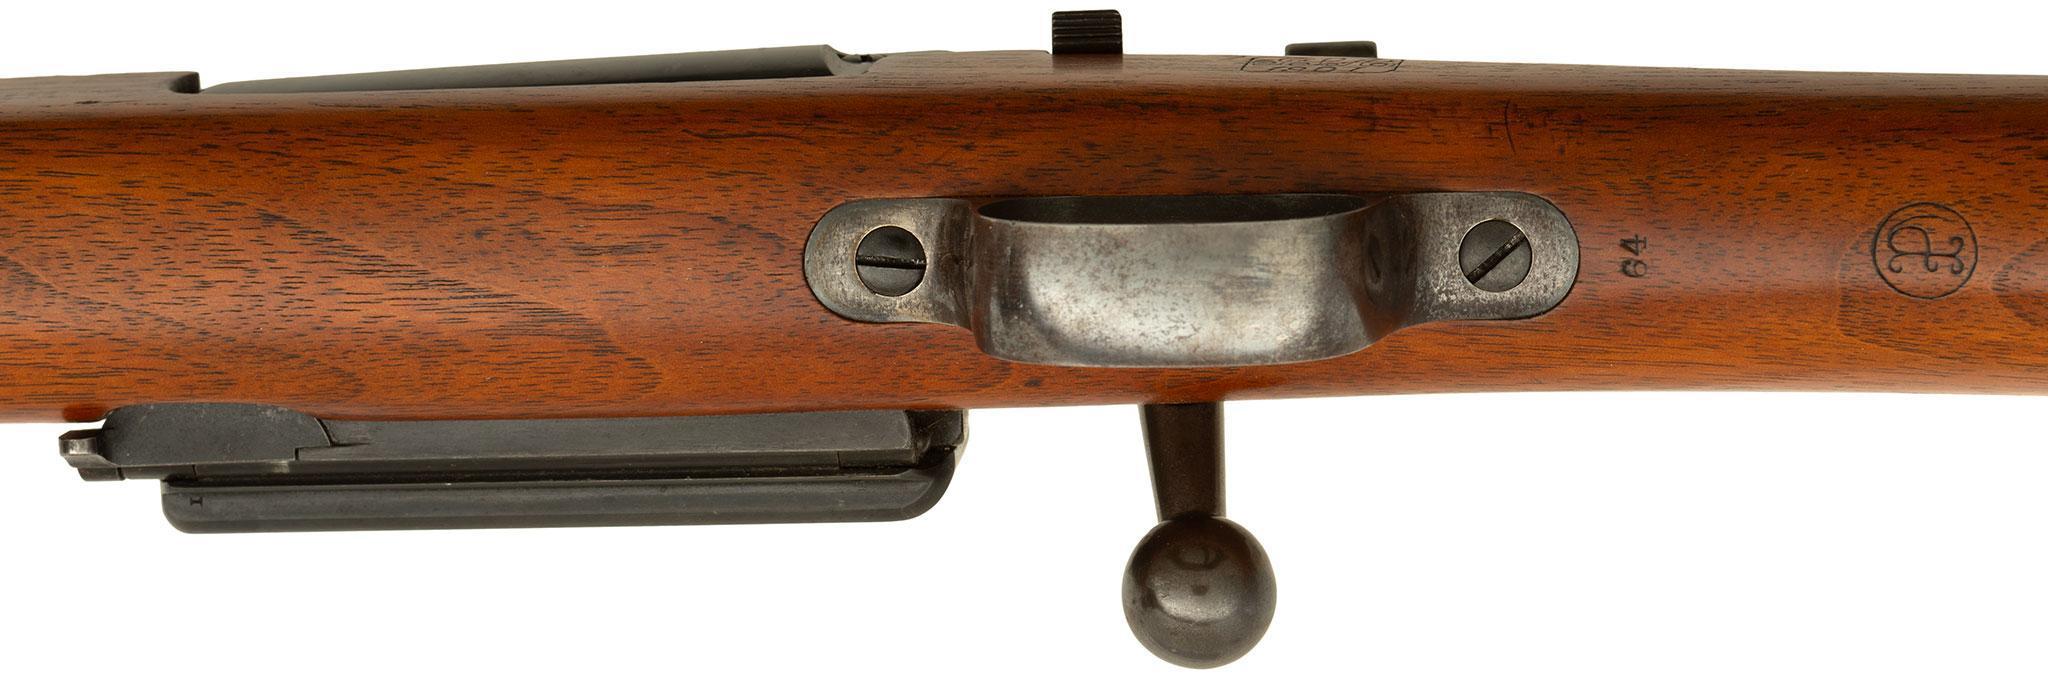 **U.S. Model 1898 Springfield Krag Rifle